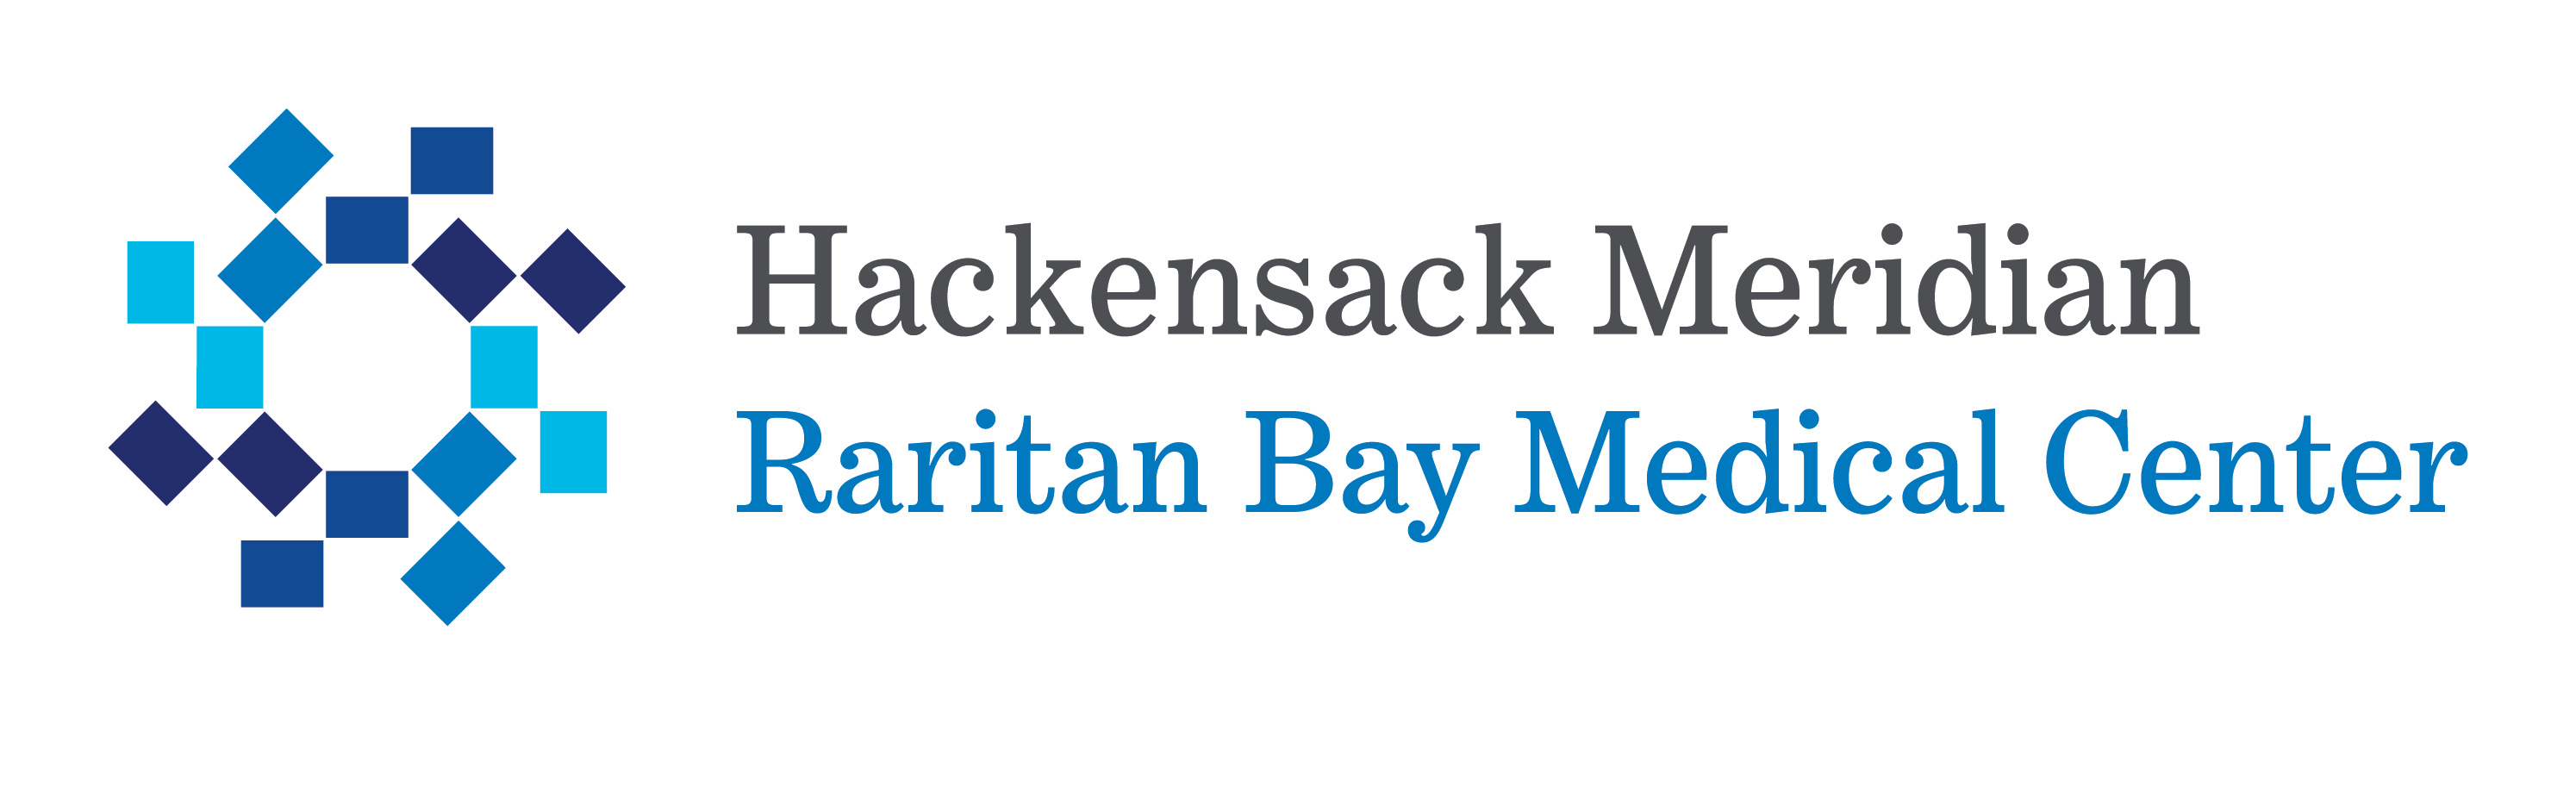 Hackensack Meridian Children's Health logo